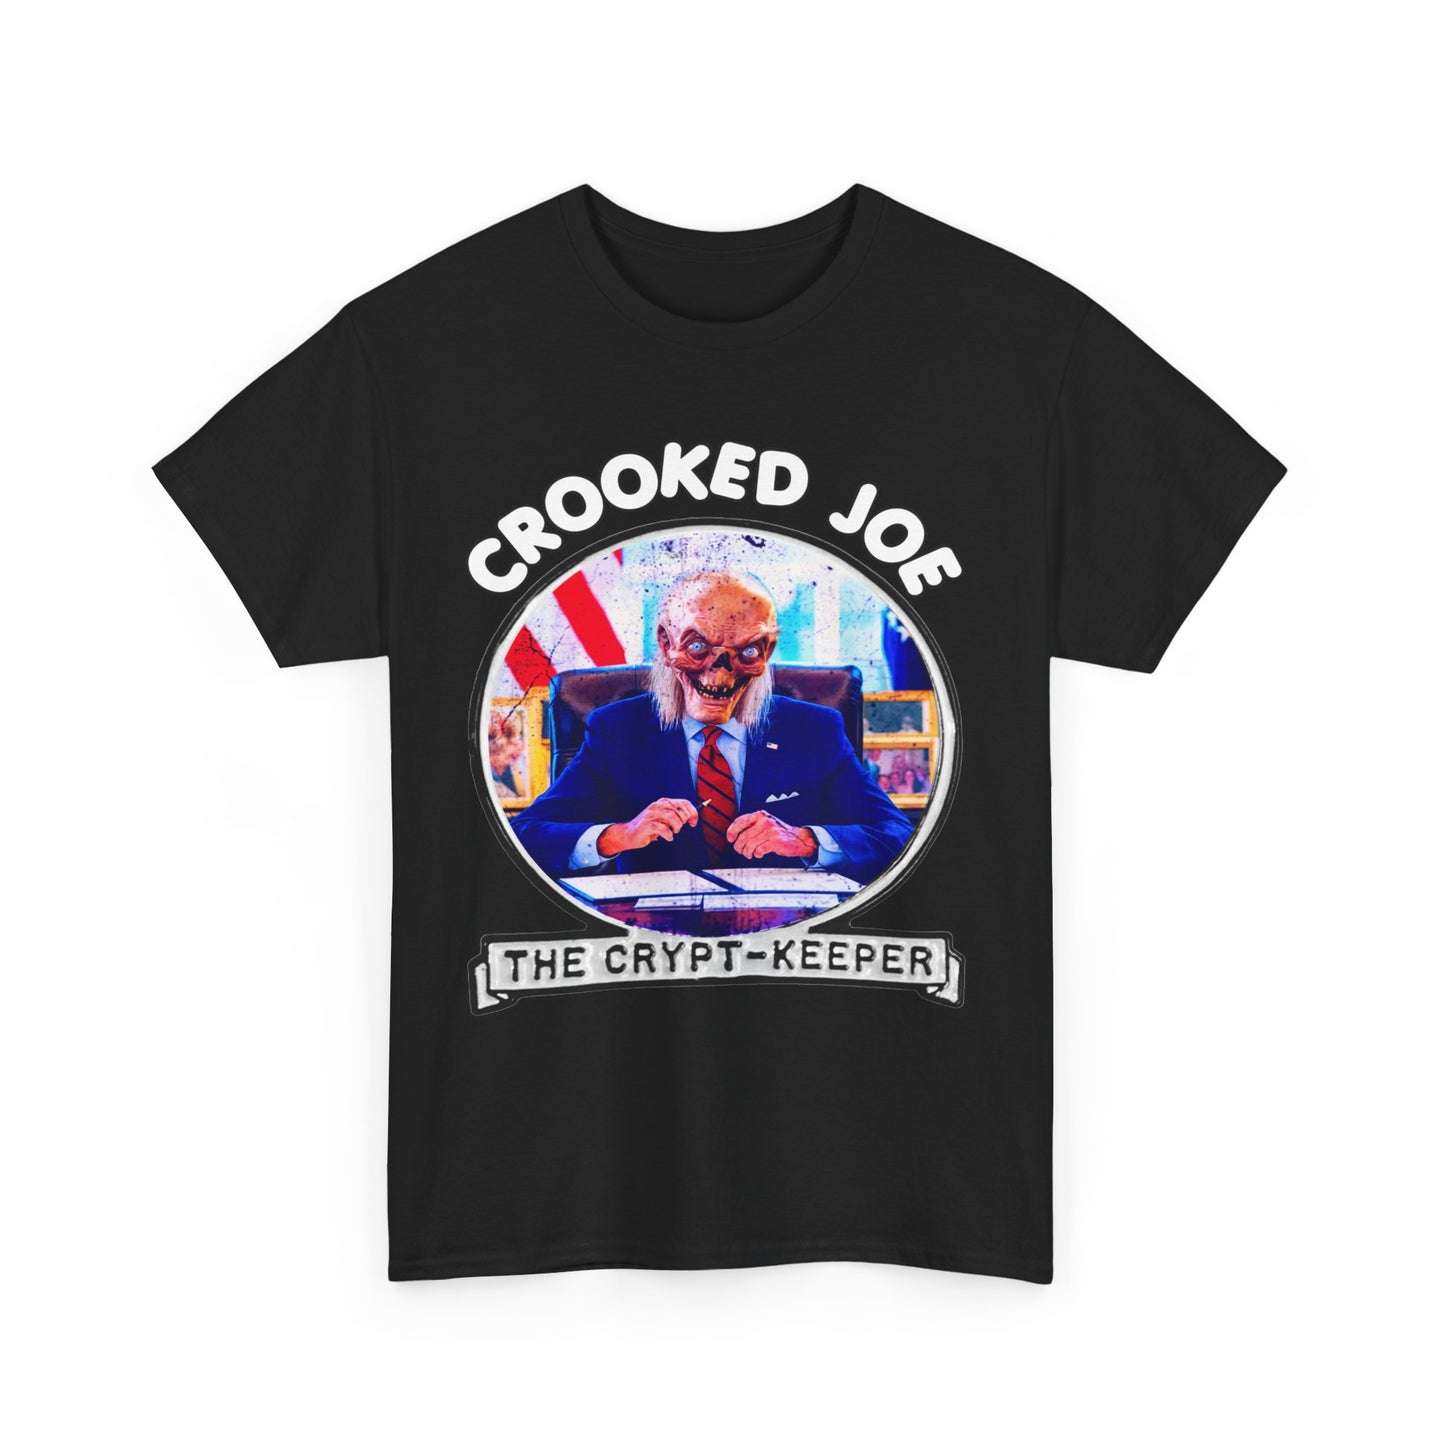 Crooked Joe Shirt